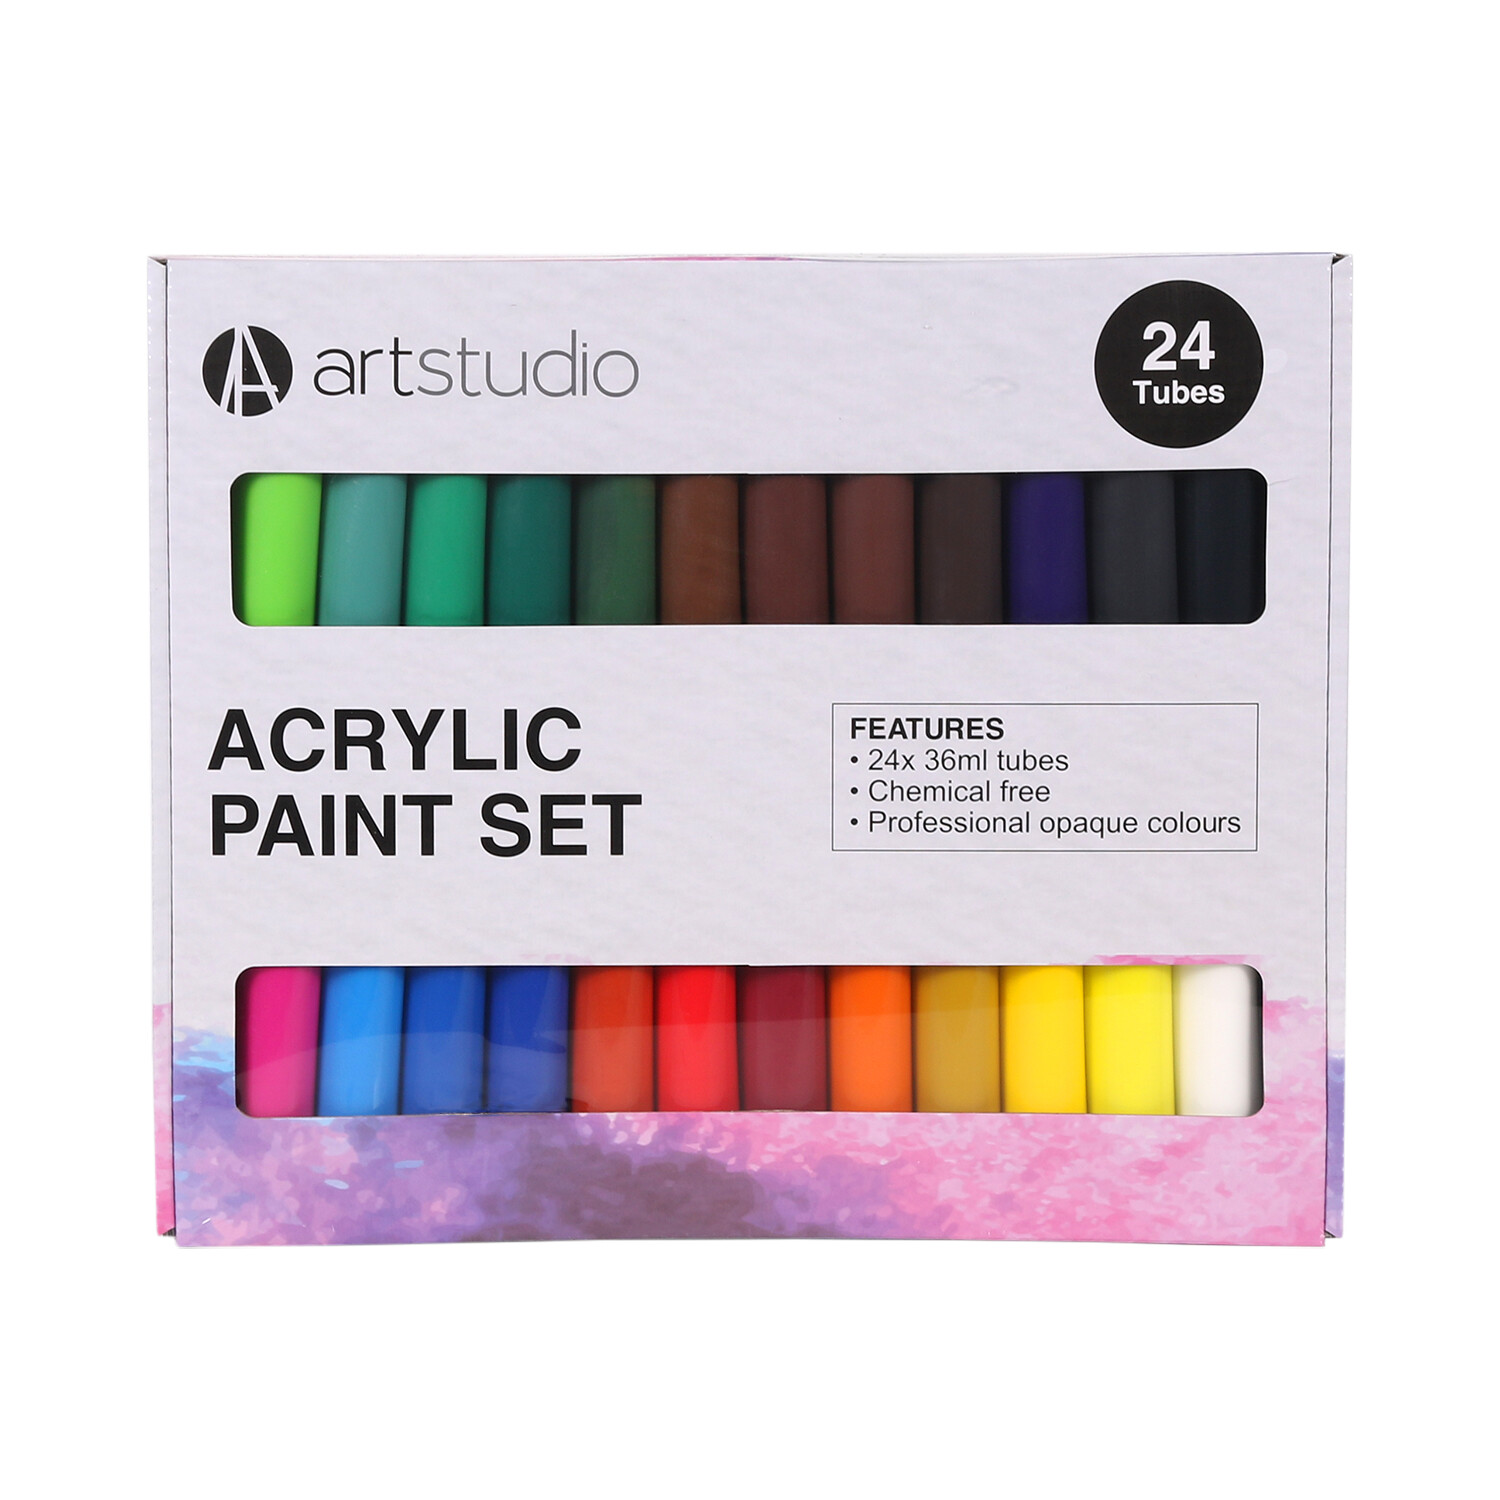 Art Studio Acrylic Paint Tubes 24 Pack Image